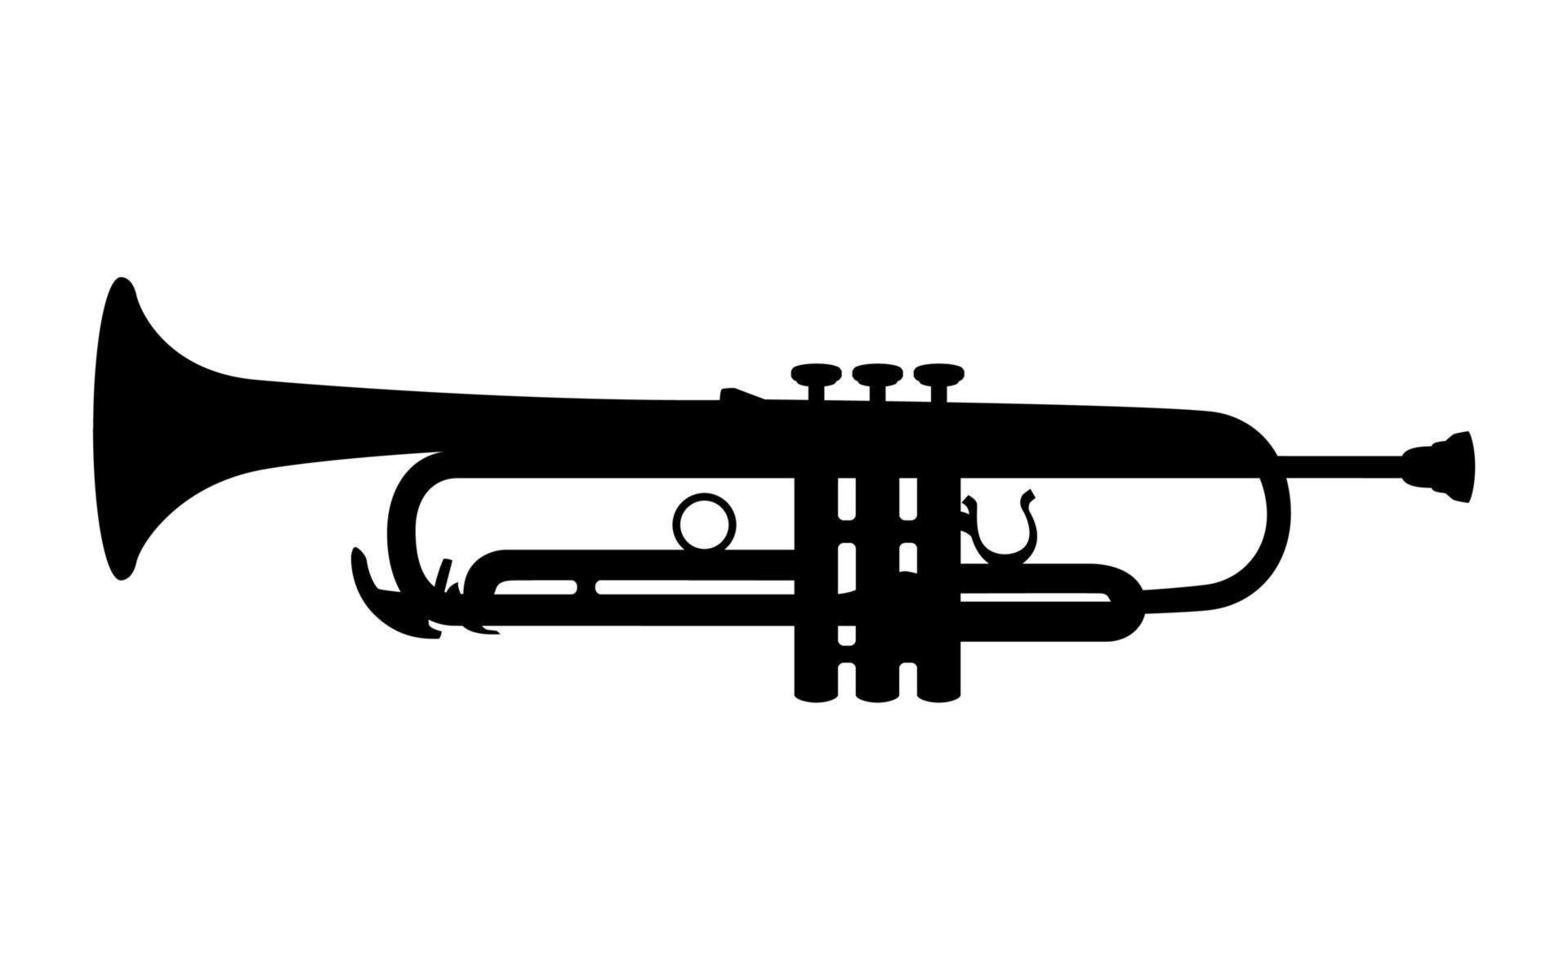 Trumpet symbol icon on white background. Vector illustration.